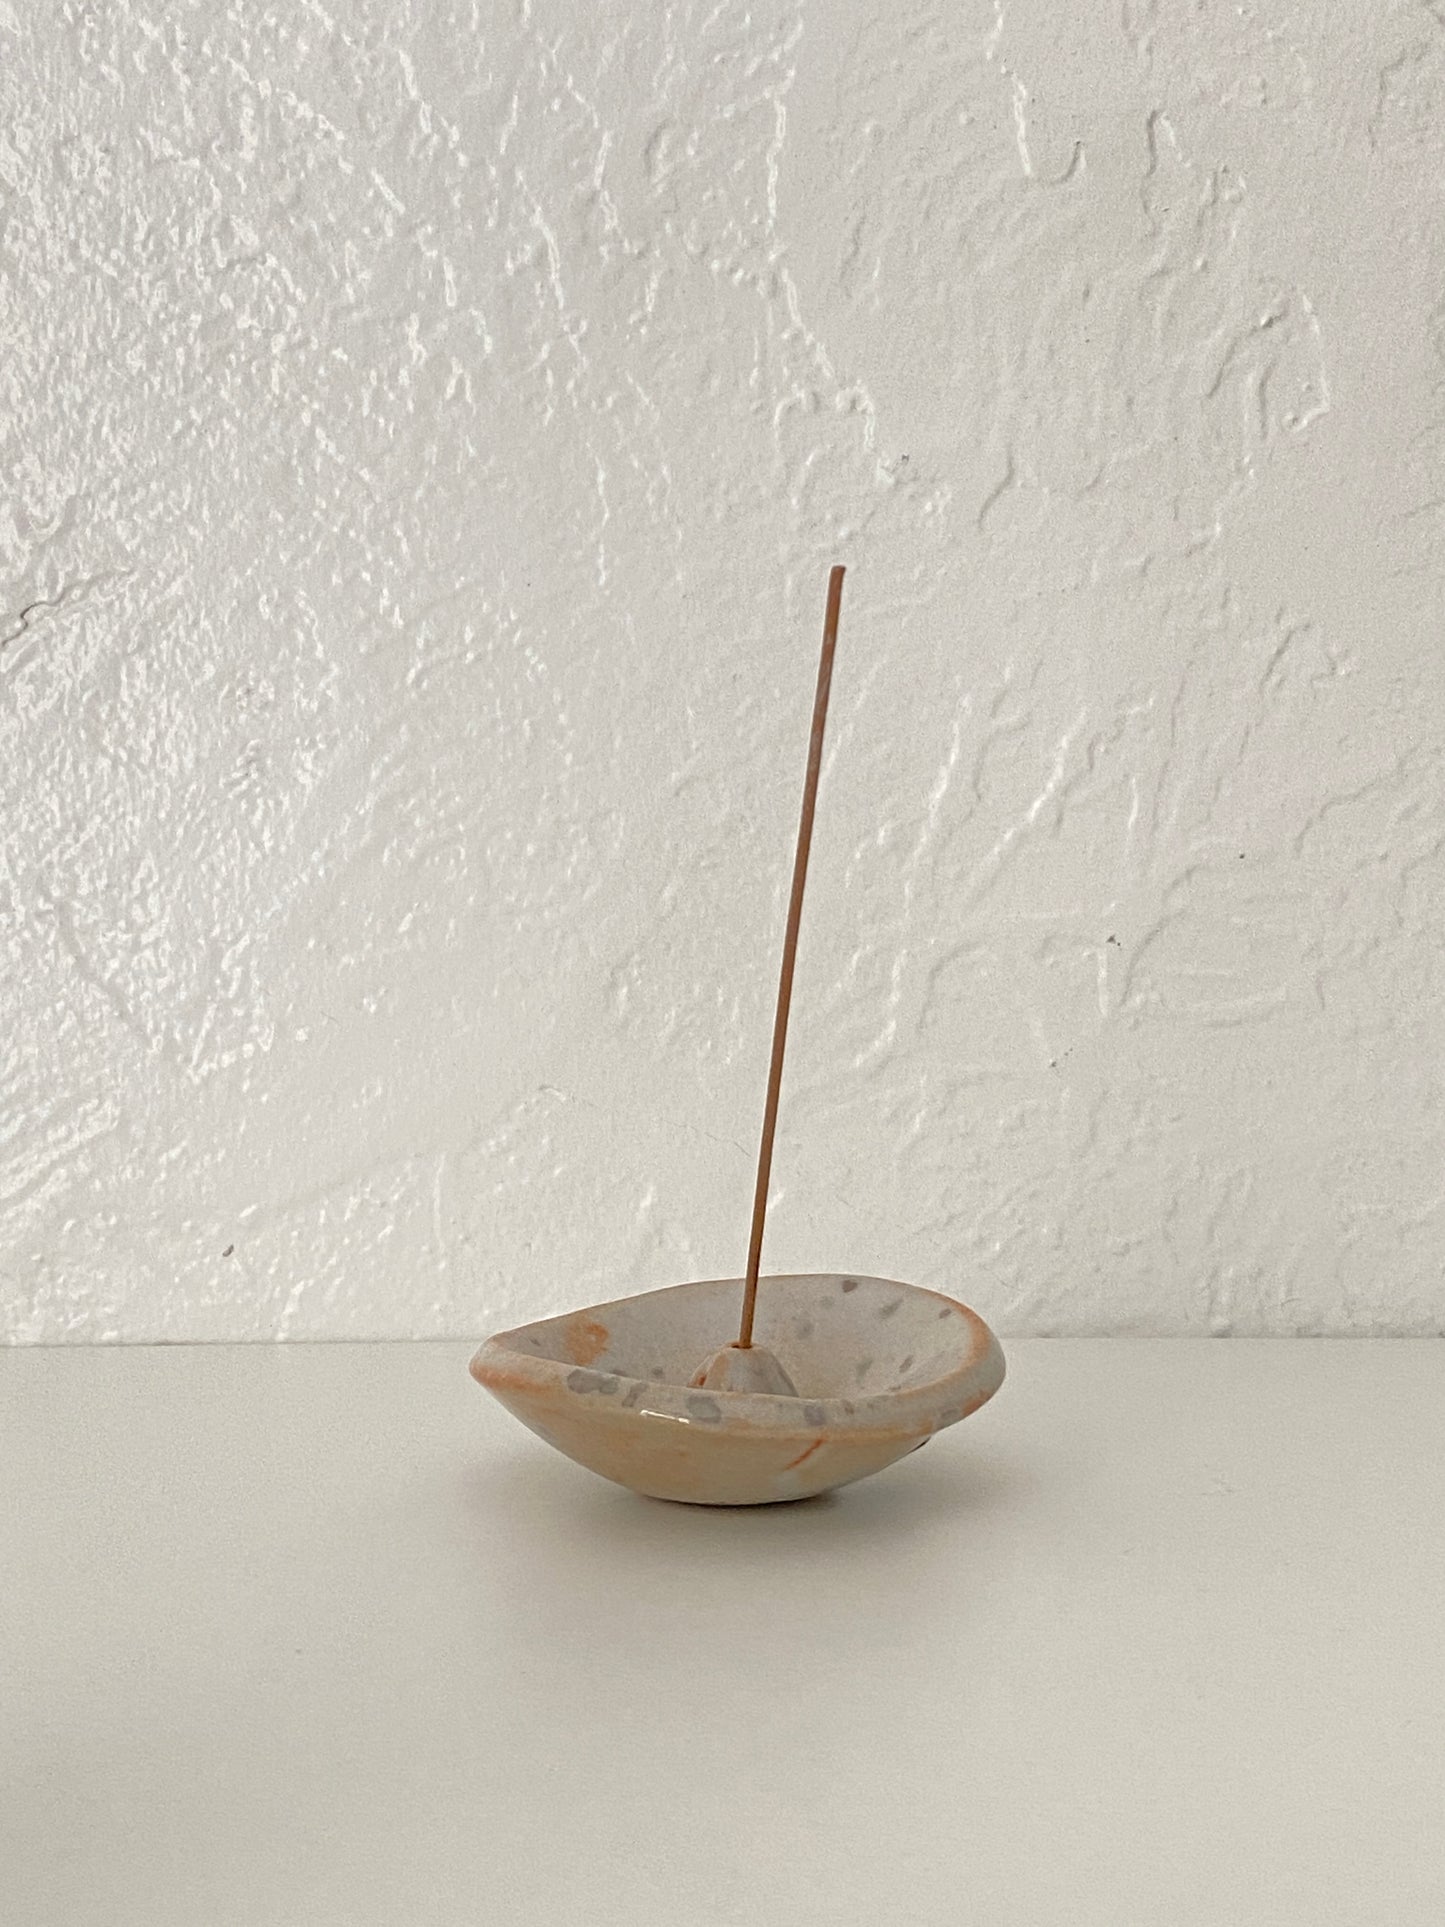 shino fired porcelain incense burner - #2